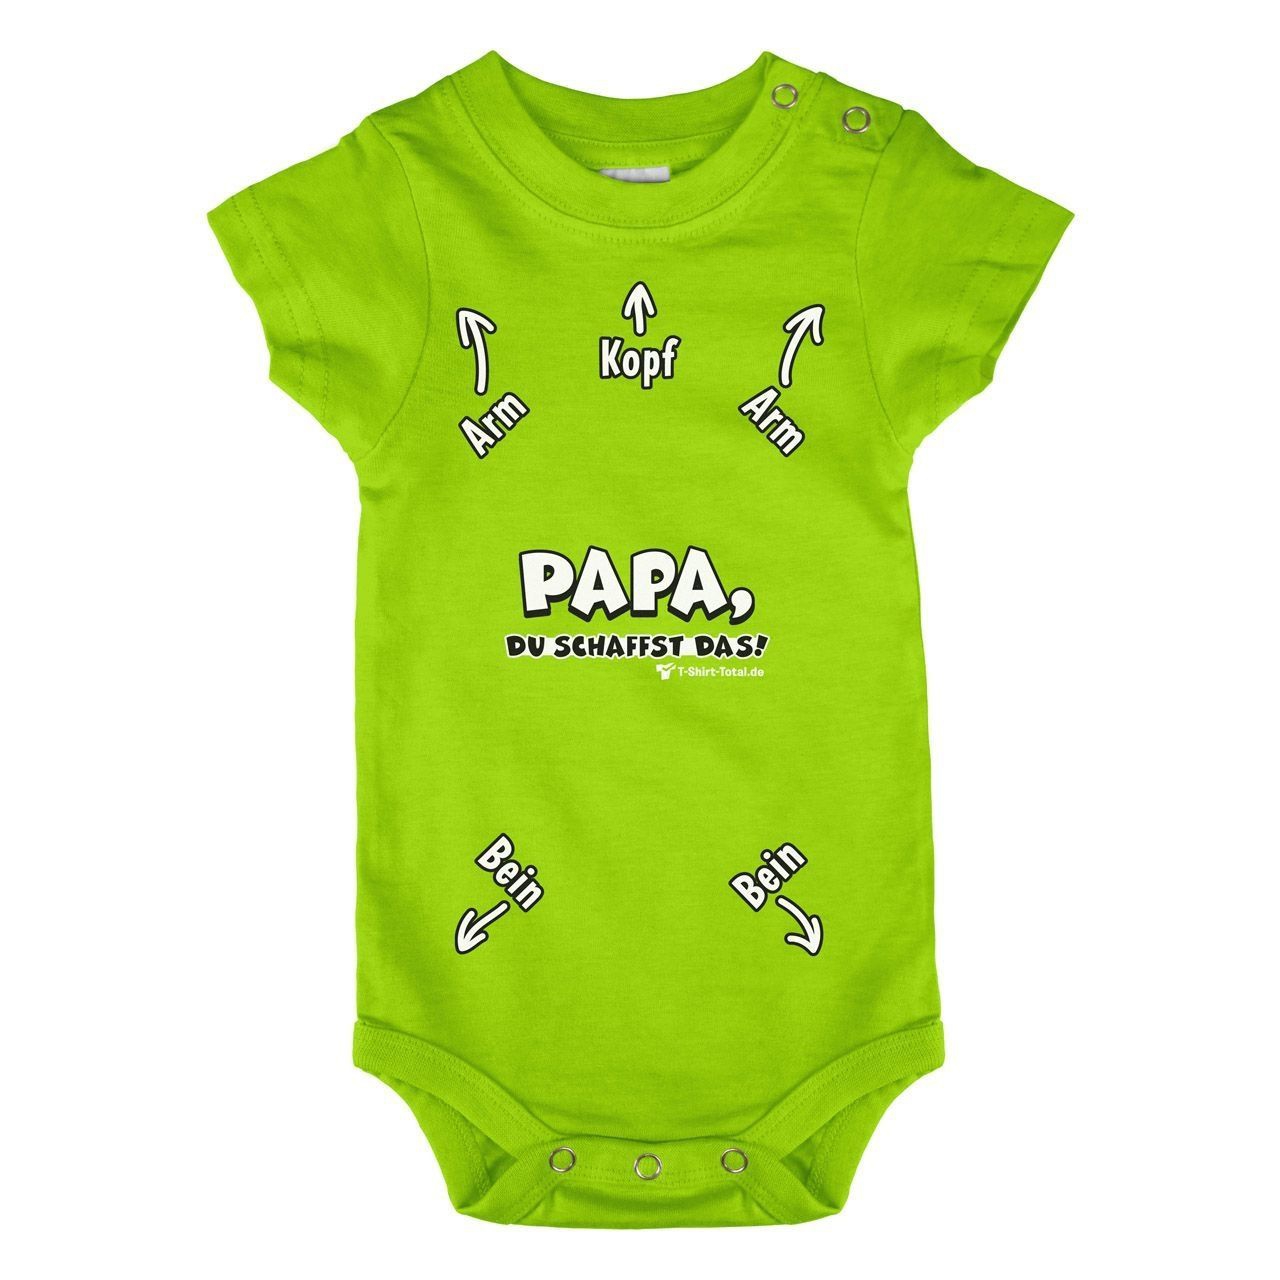 Papa du schaffst das Baby Body Kurzarm hellgrün 56 / 62